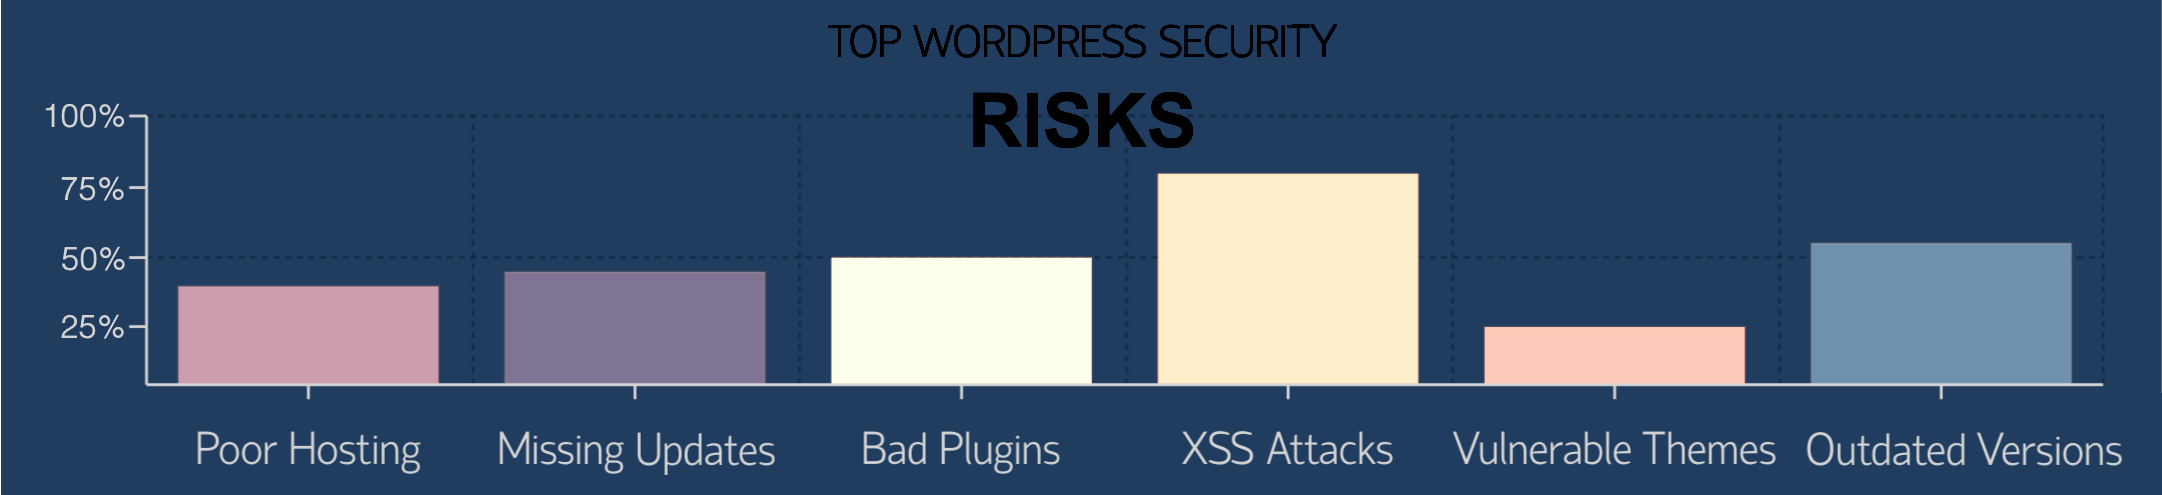 wordpress security risks